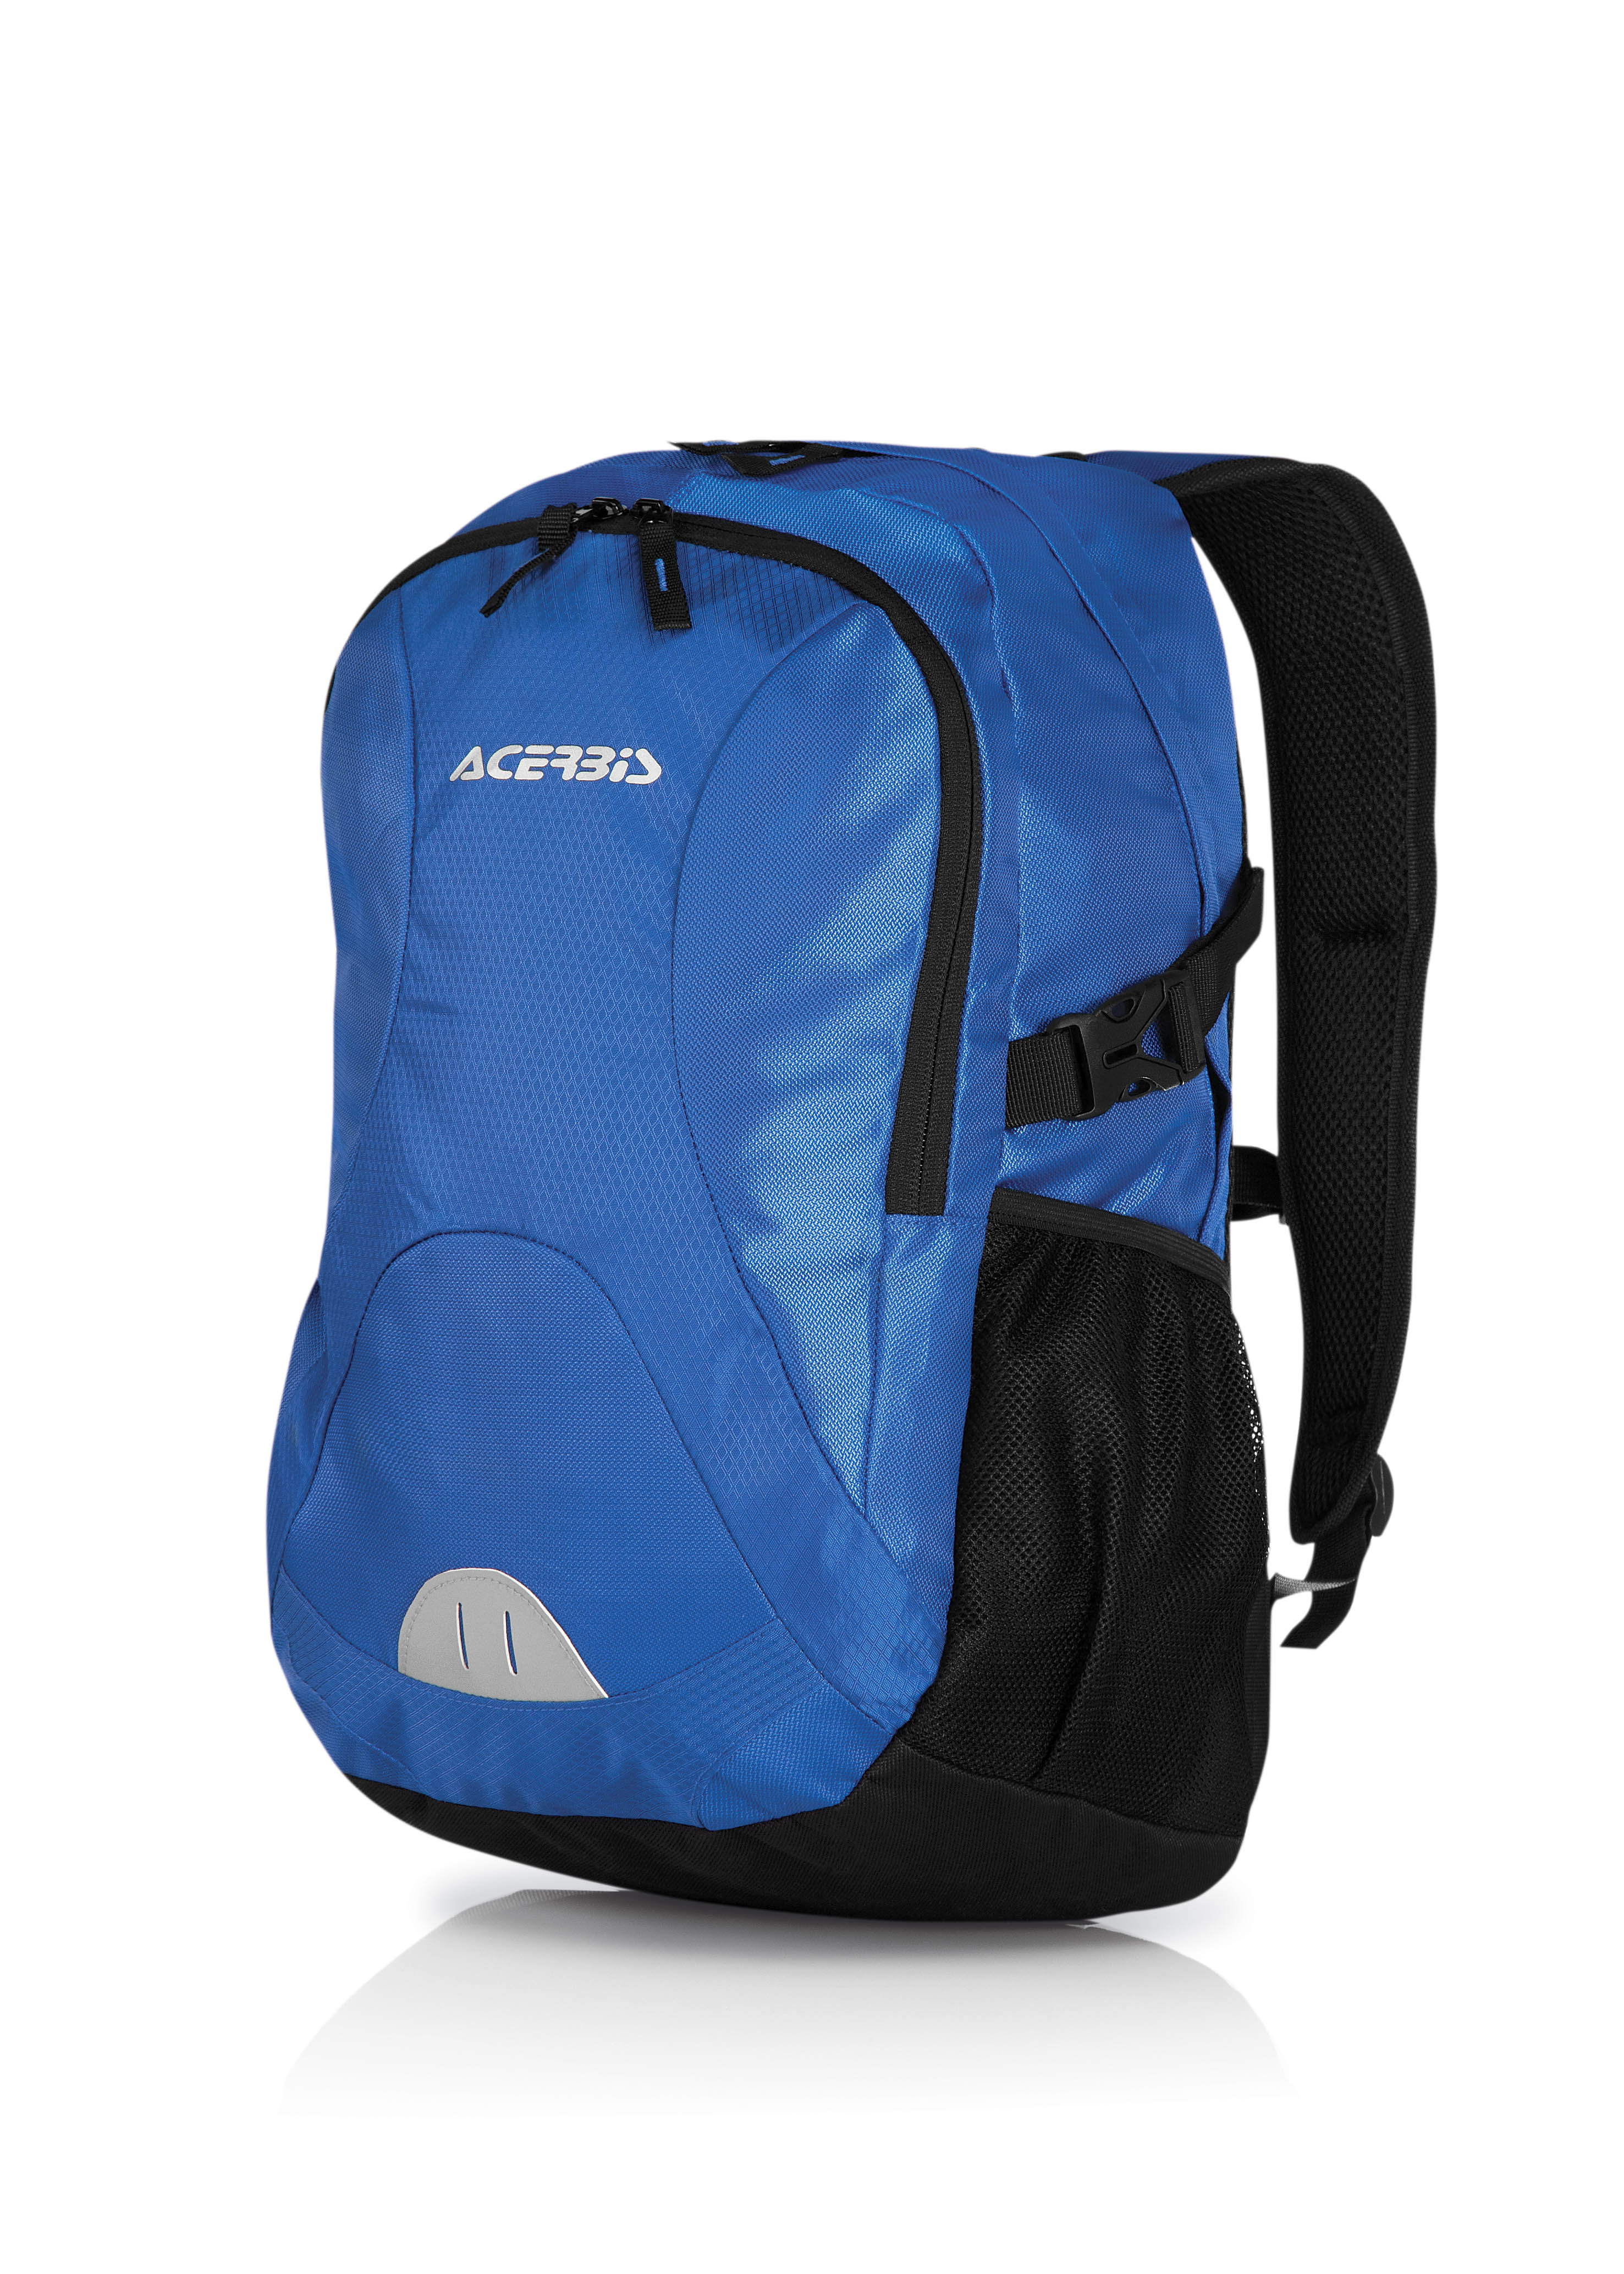 фото Acerbis рюкзак acerbis profile blue/black (20 l)